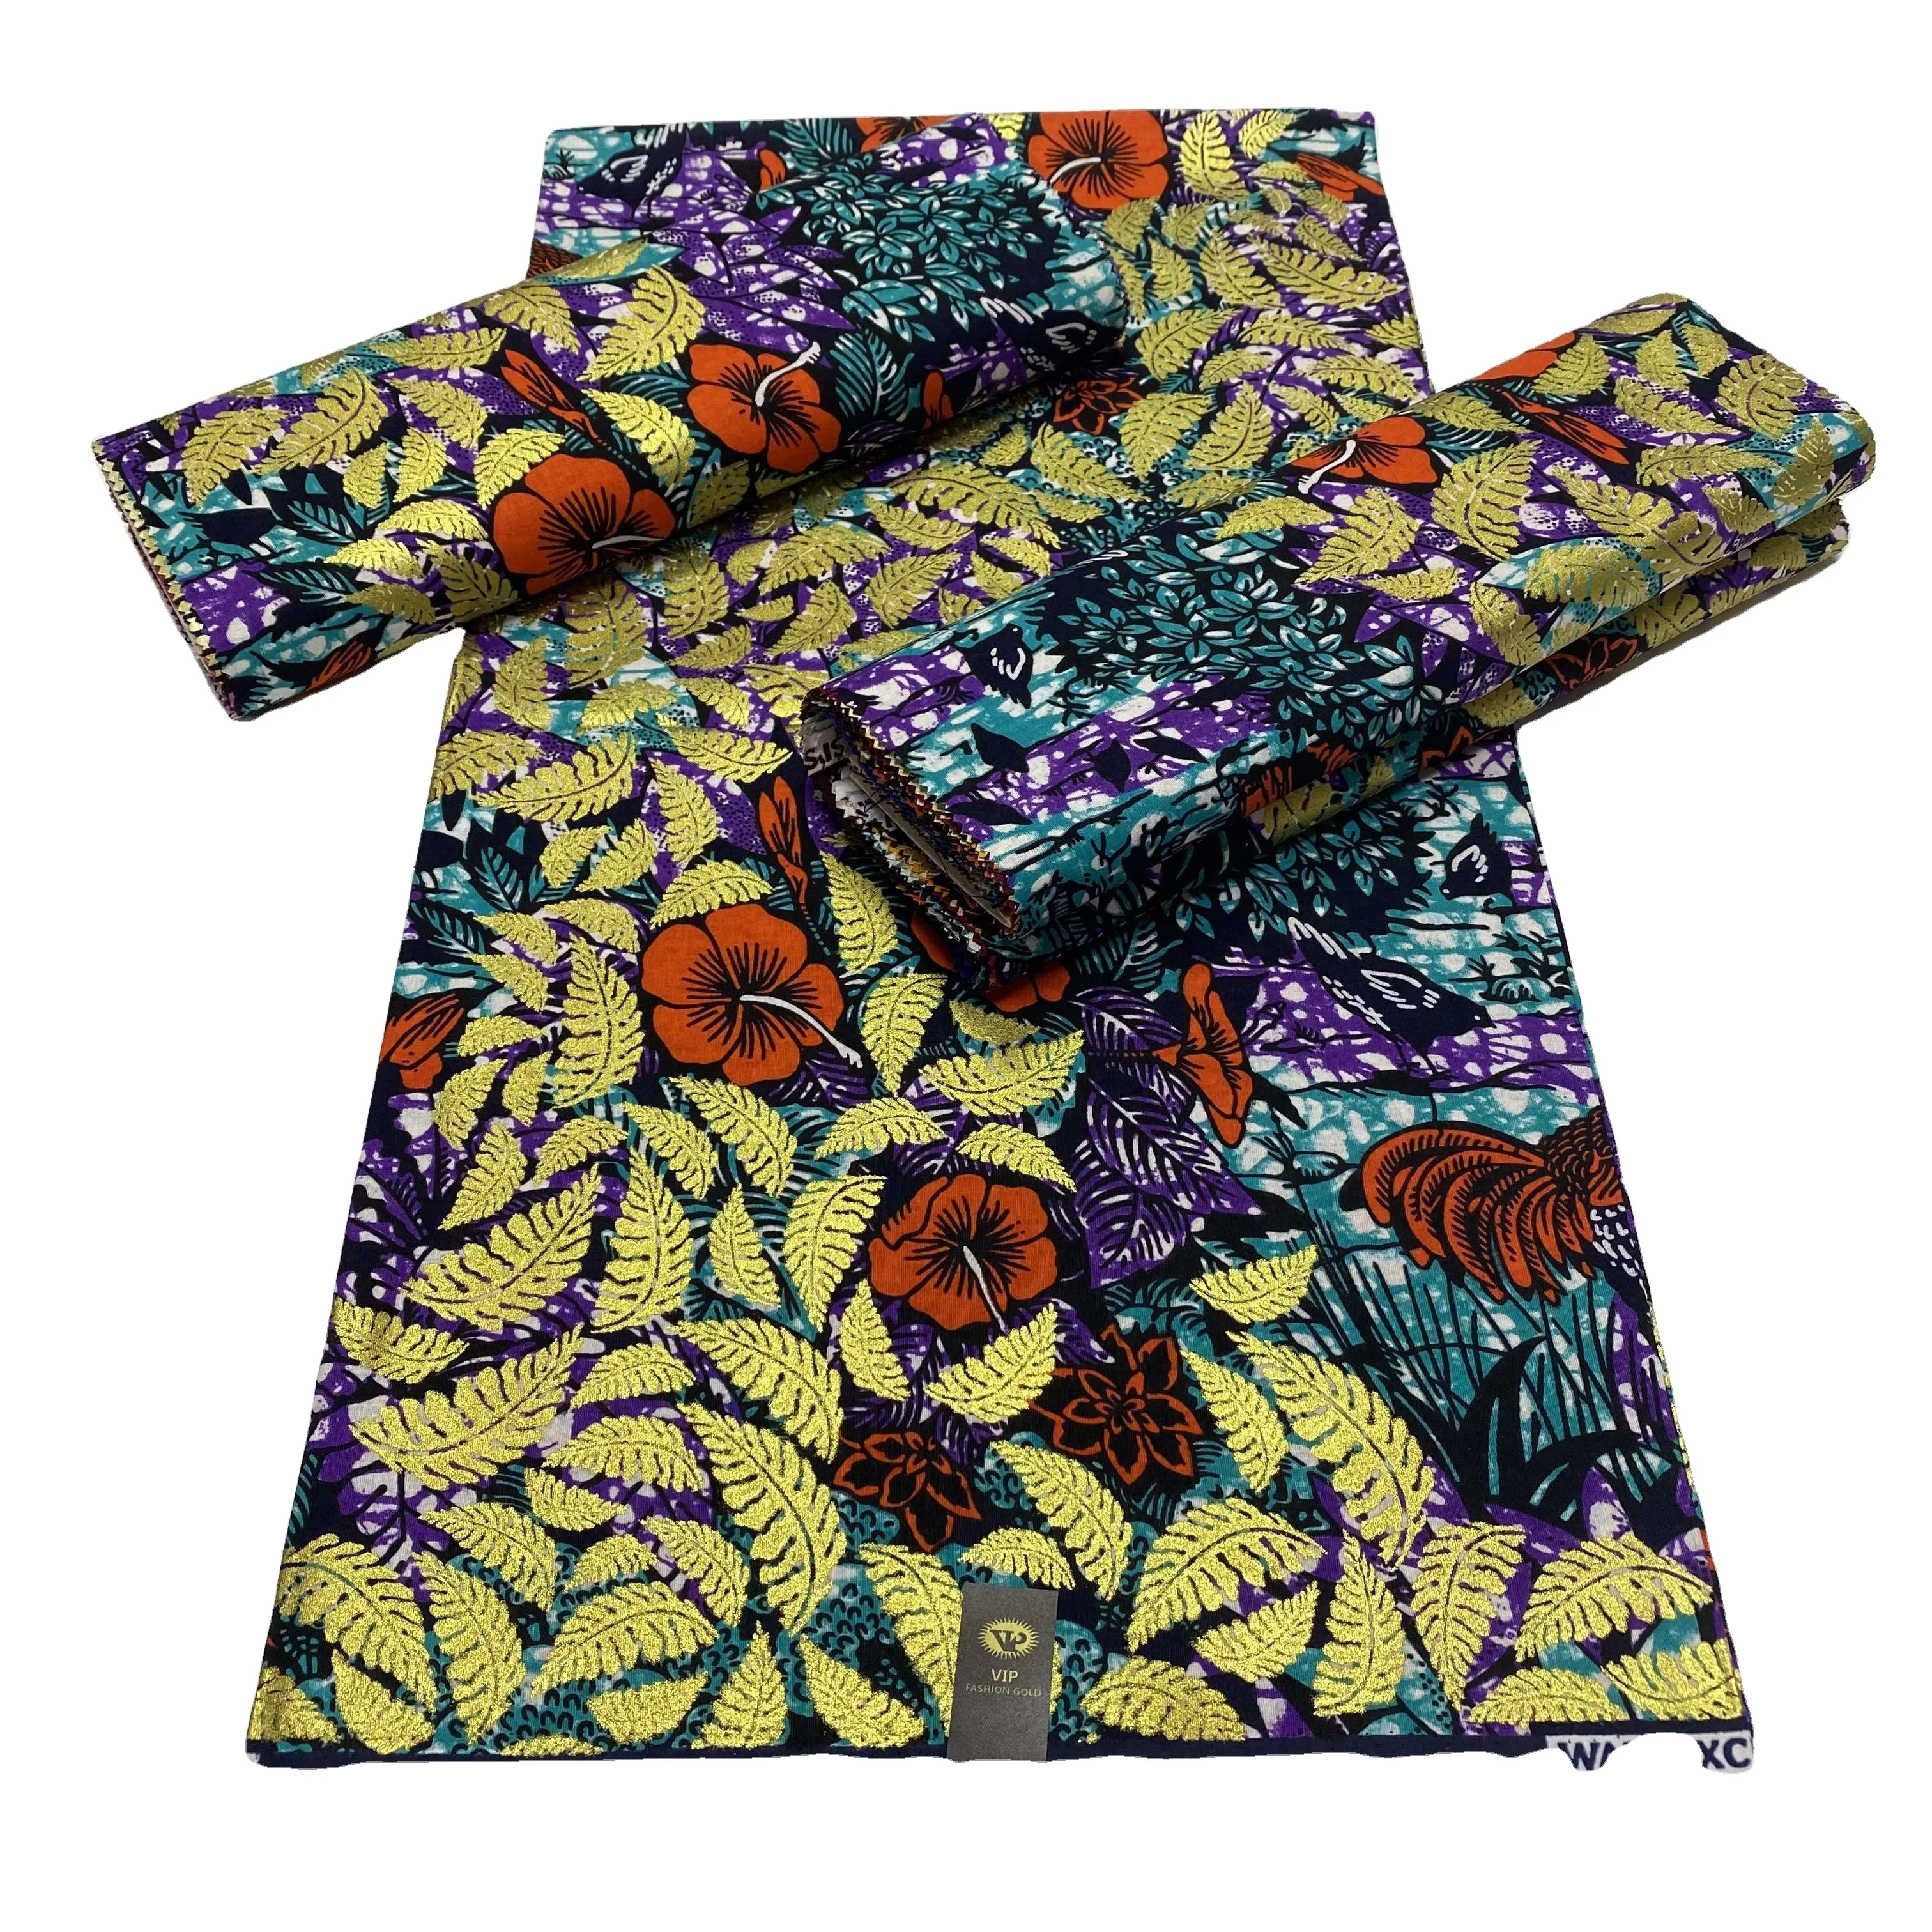 

Wholesale Best Quality 100% Cotton Print Gold Wax Fabric African Textile Nigeria Batik Design Holland Golden Wax Fabrics 6 Yards